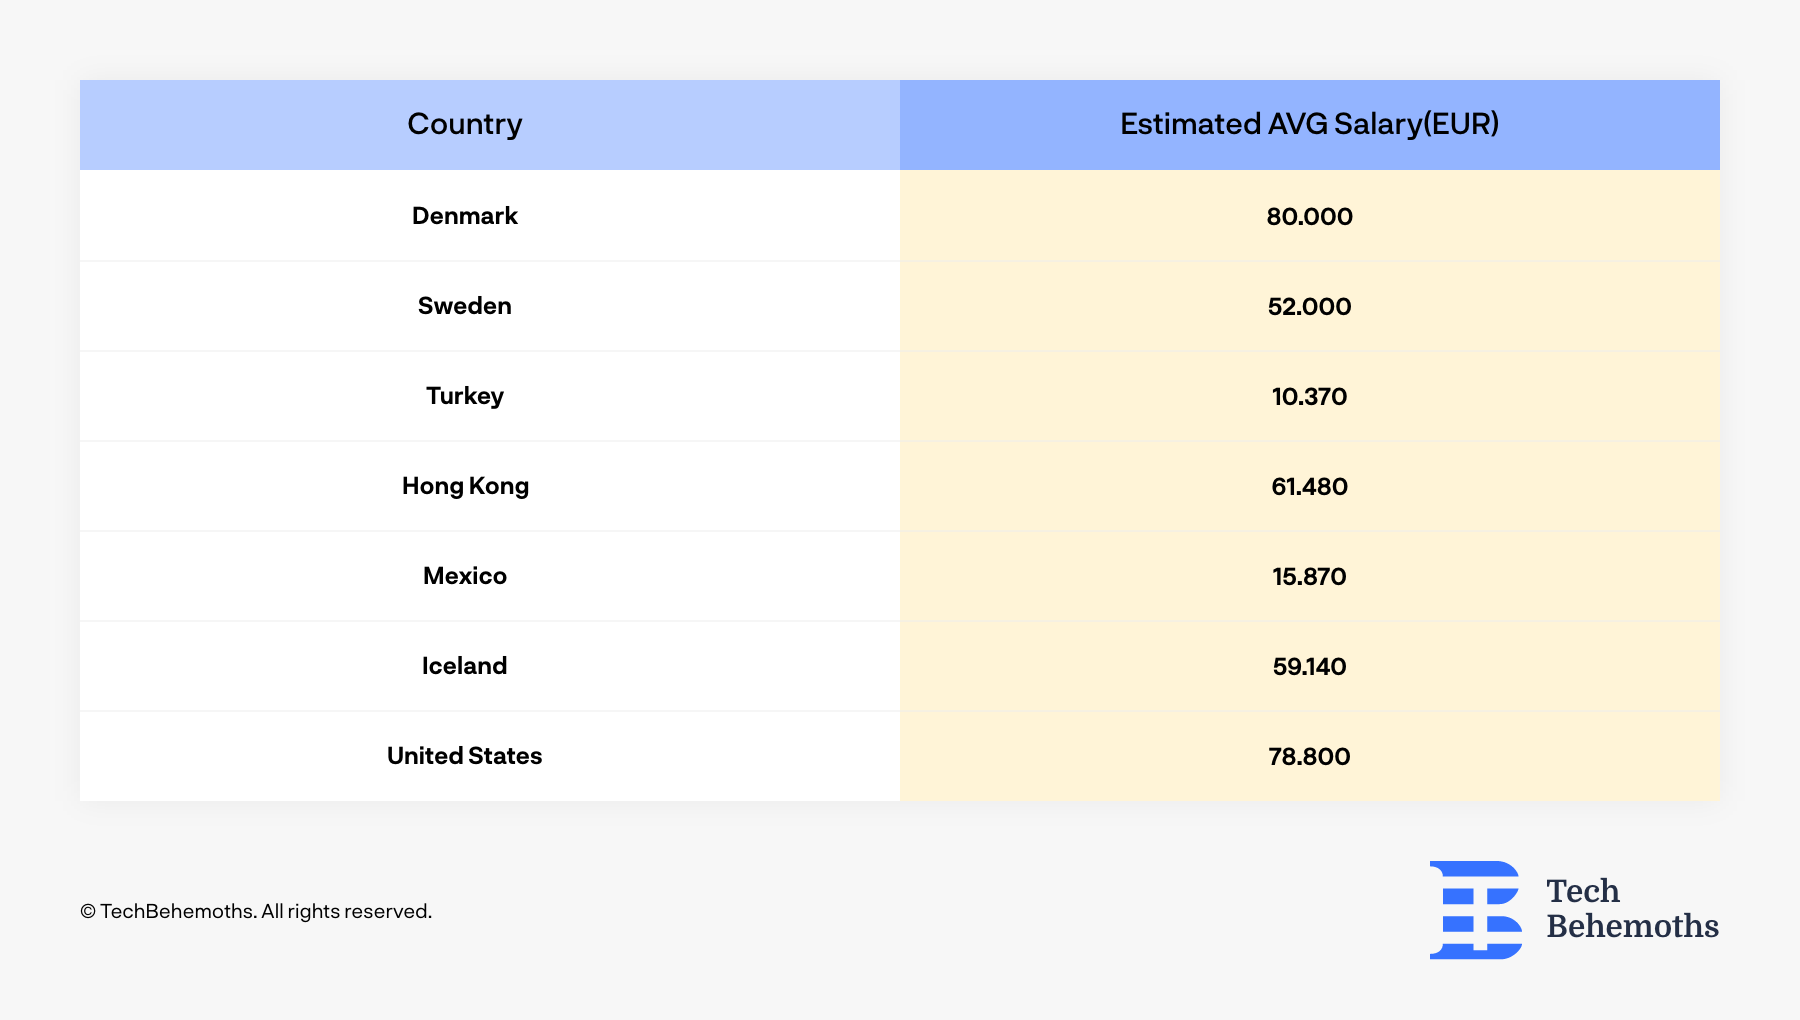 .Net developer salaries in Denmark vs other countries